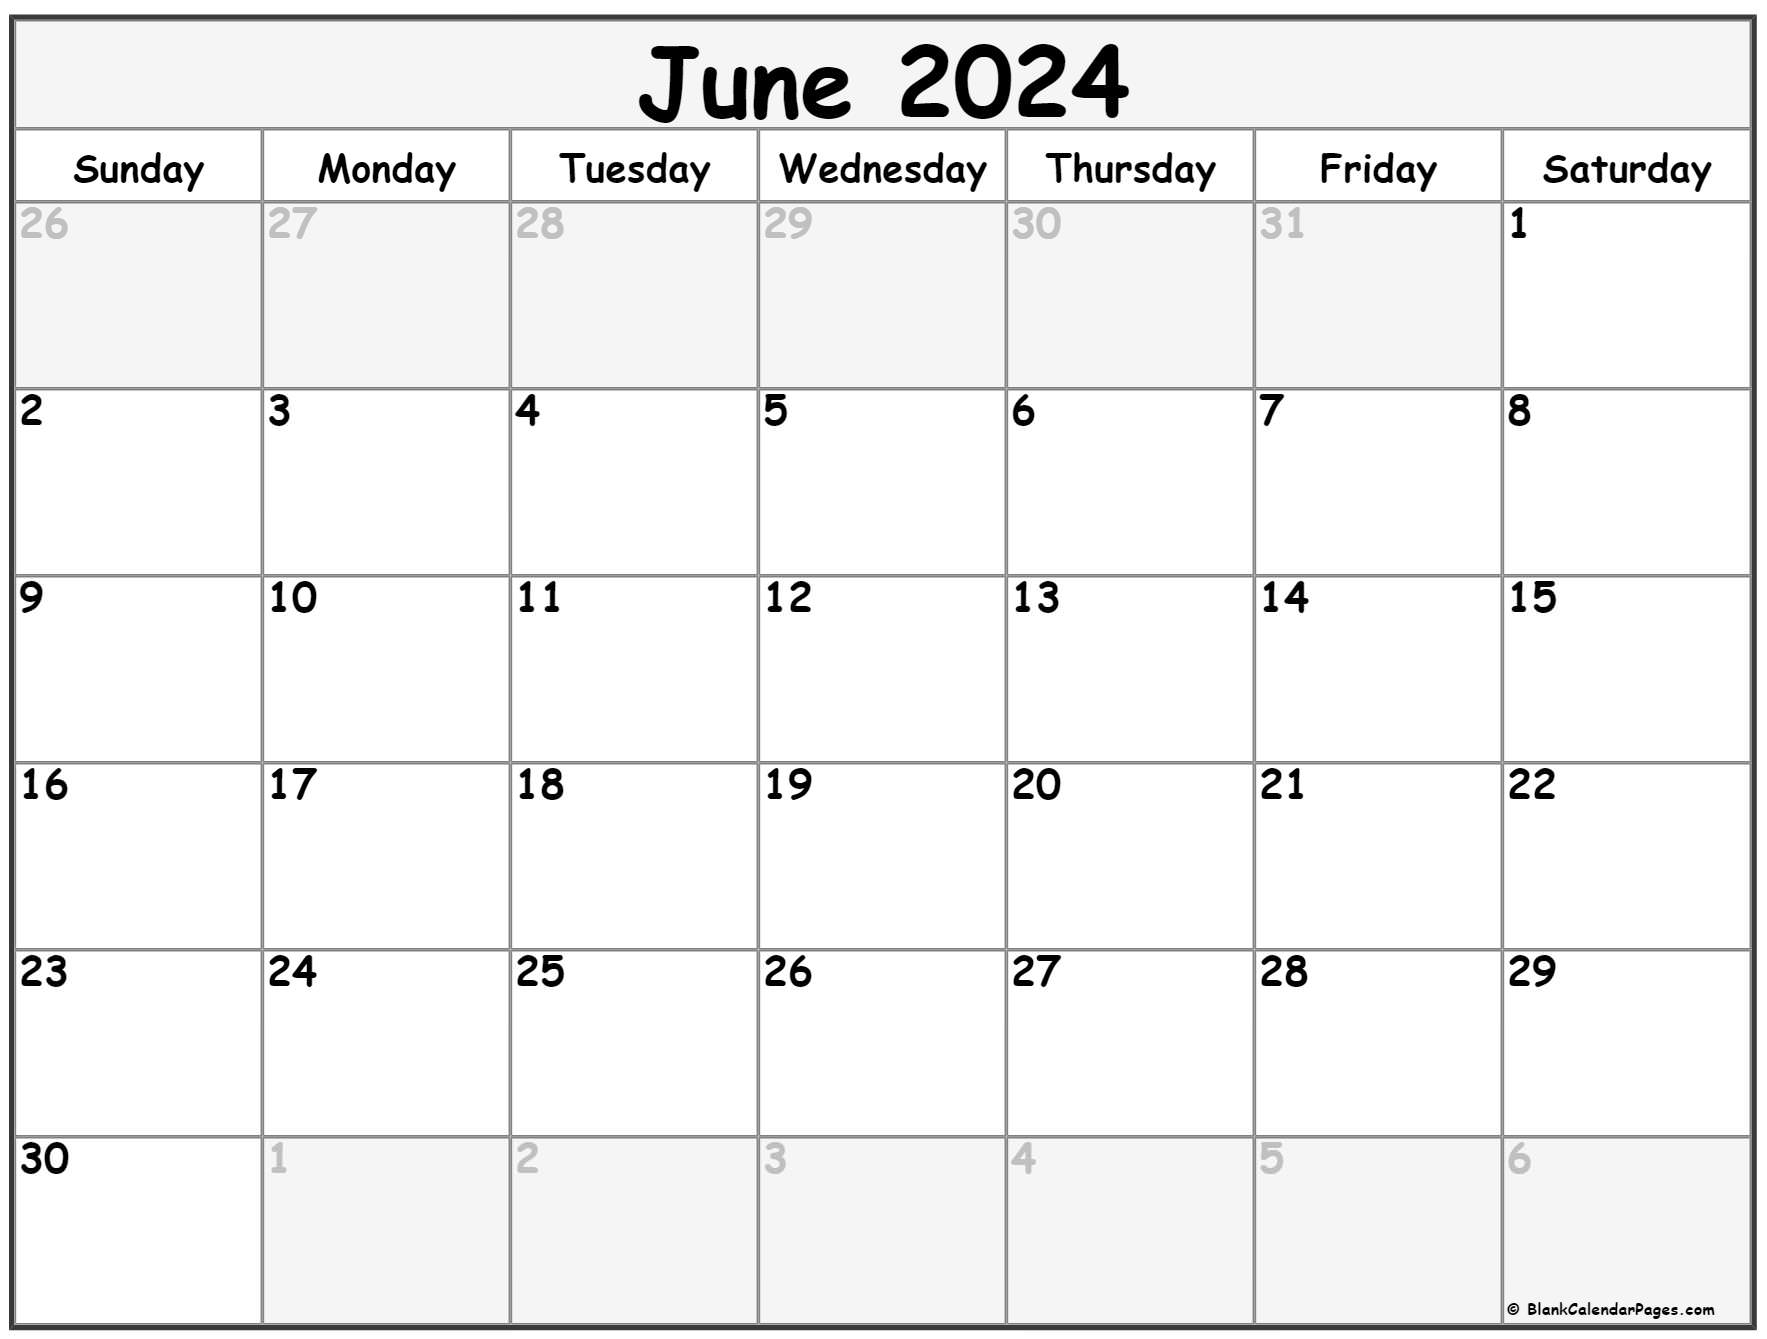 June 2024 Calendar | Free Printable Calendar for Printable Calendar June 2024 Free